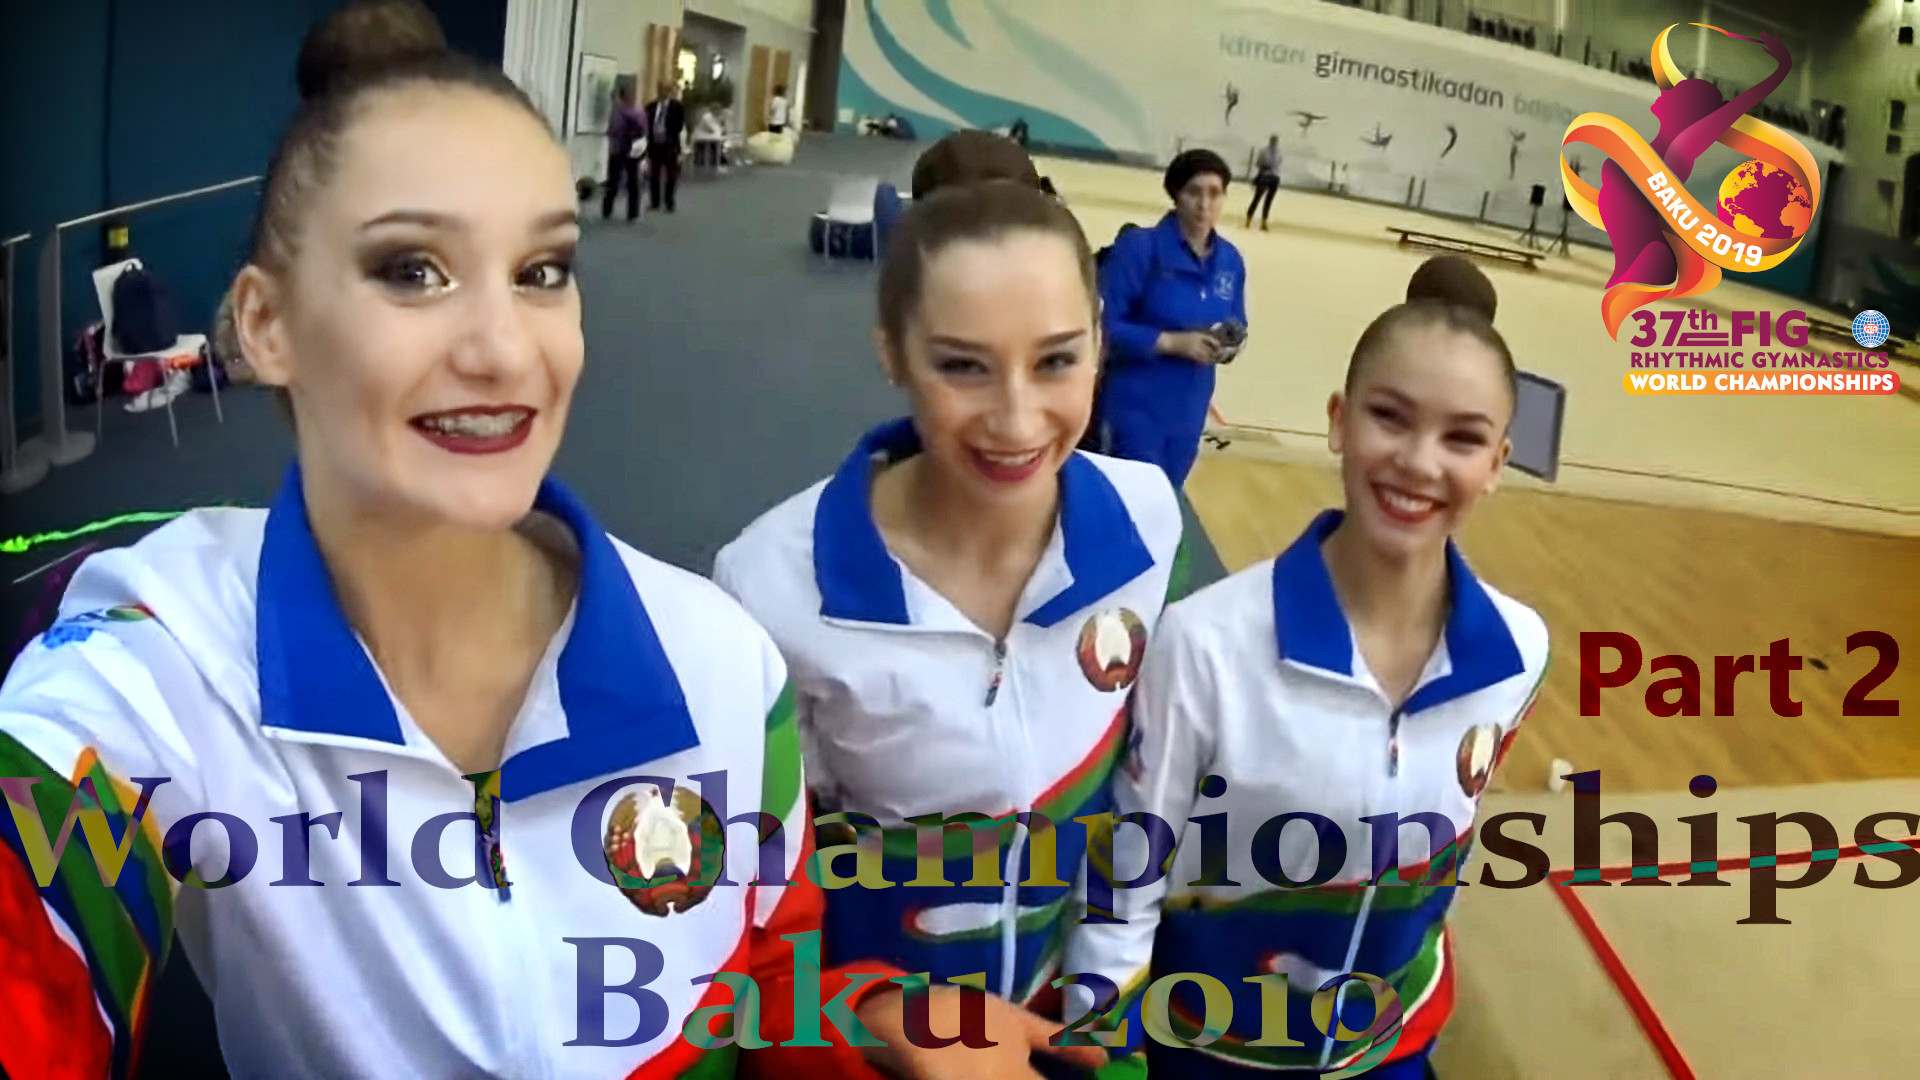 Harnosik Pictures World Championships Baku 2019 Vol.2